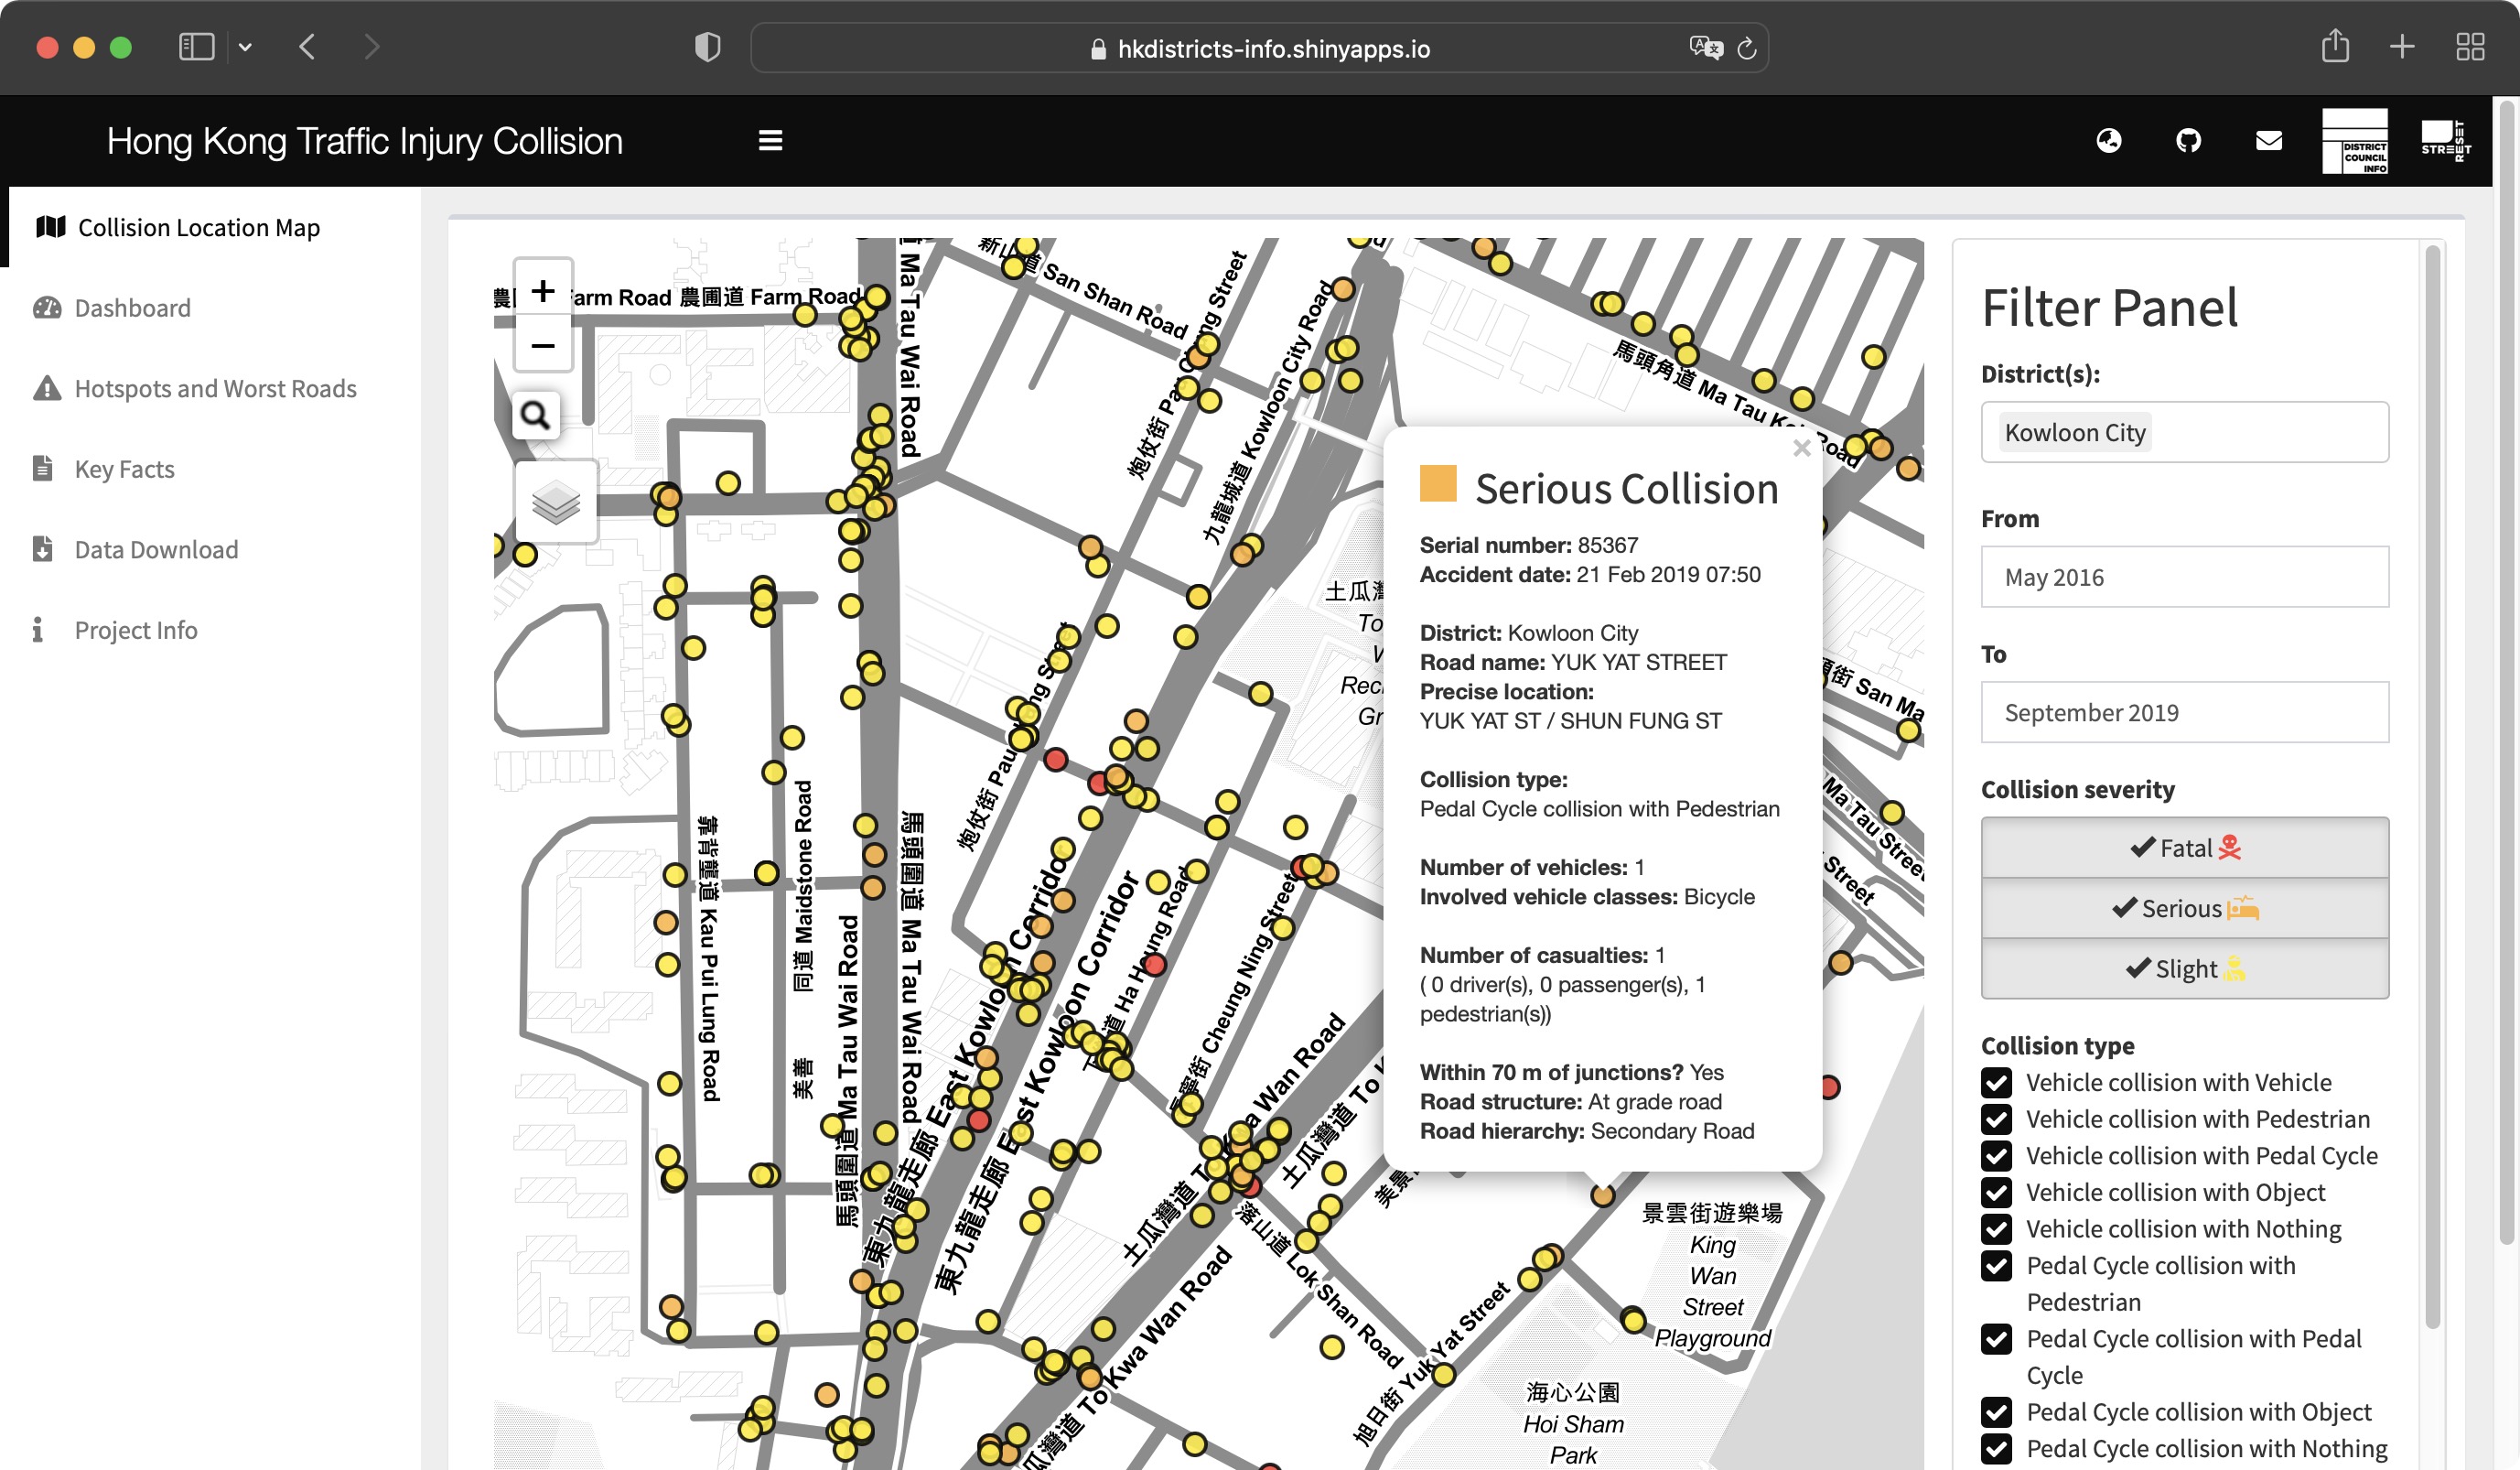 Collision location map